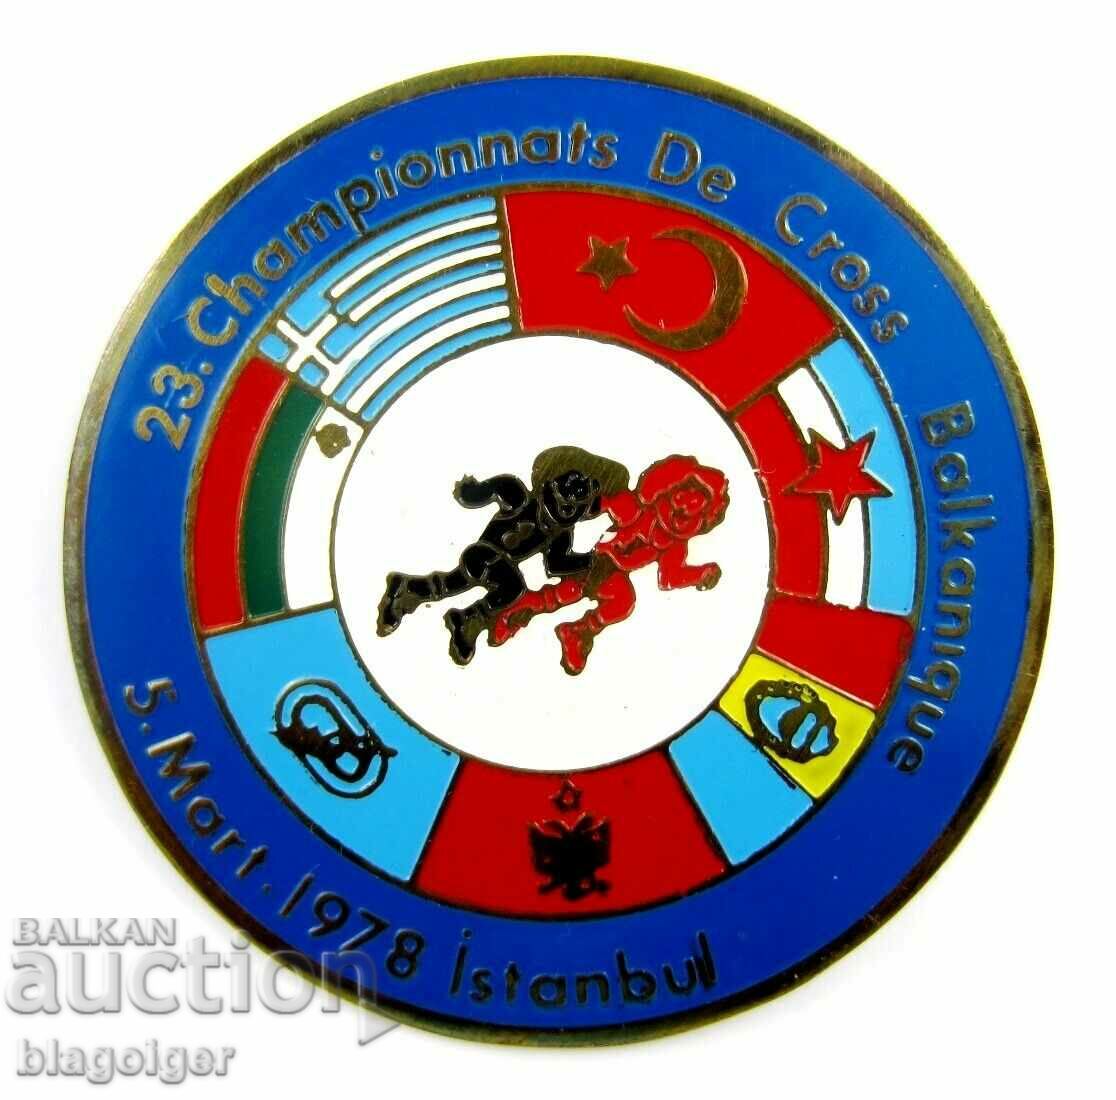 Balkaniad-Balkan Games-Cross Championship-1978-Istanbul